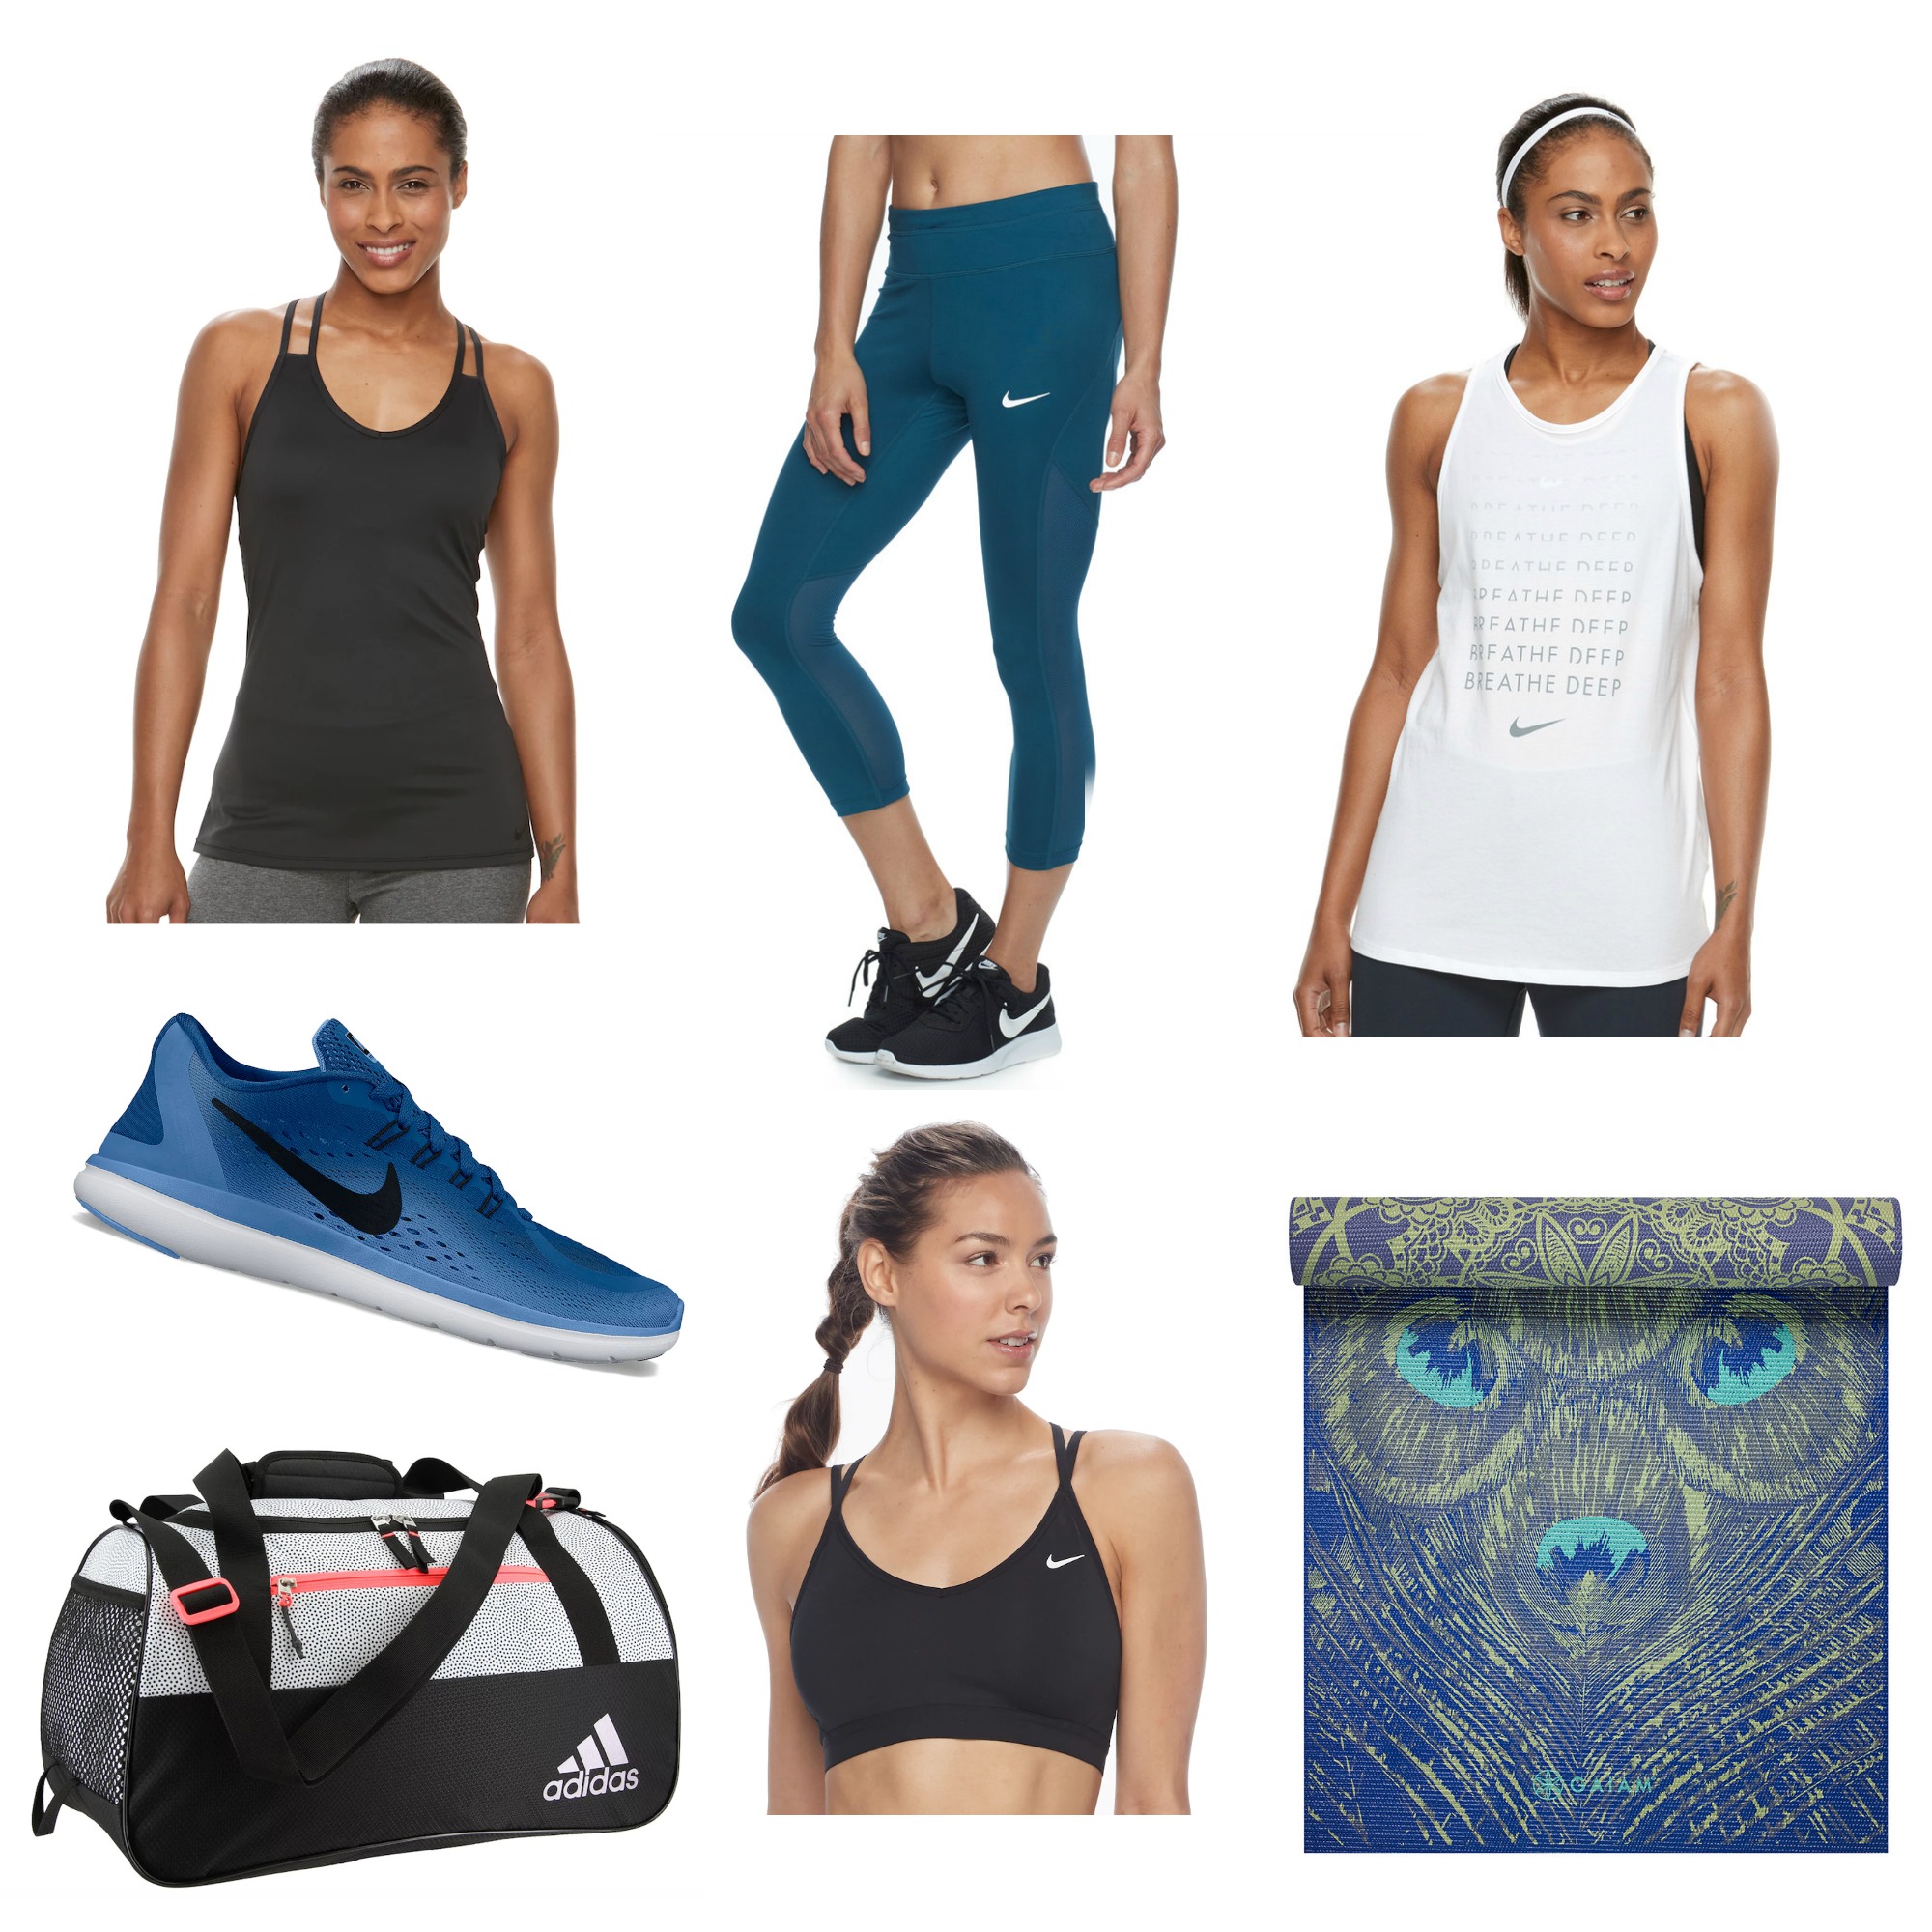 's Activewear Fall 2017 - Nike, Adidas, Gaiam